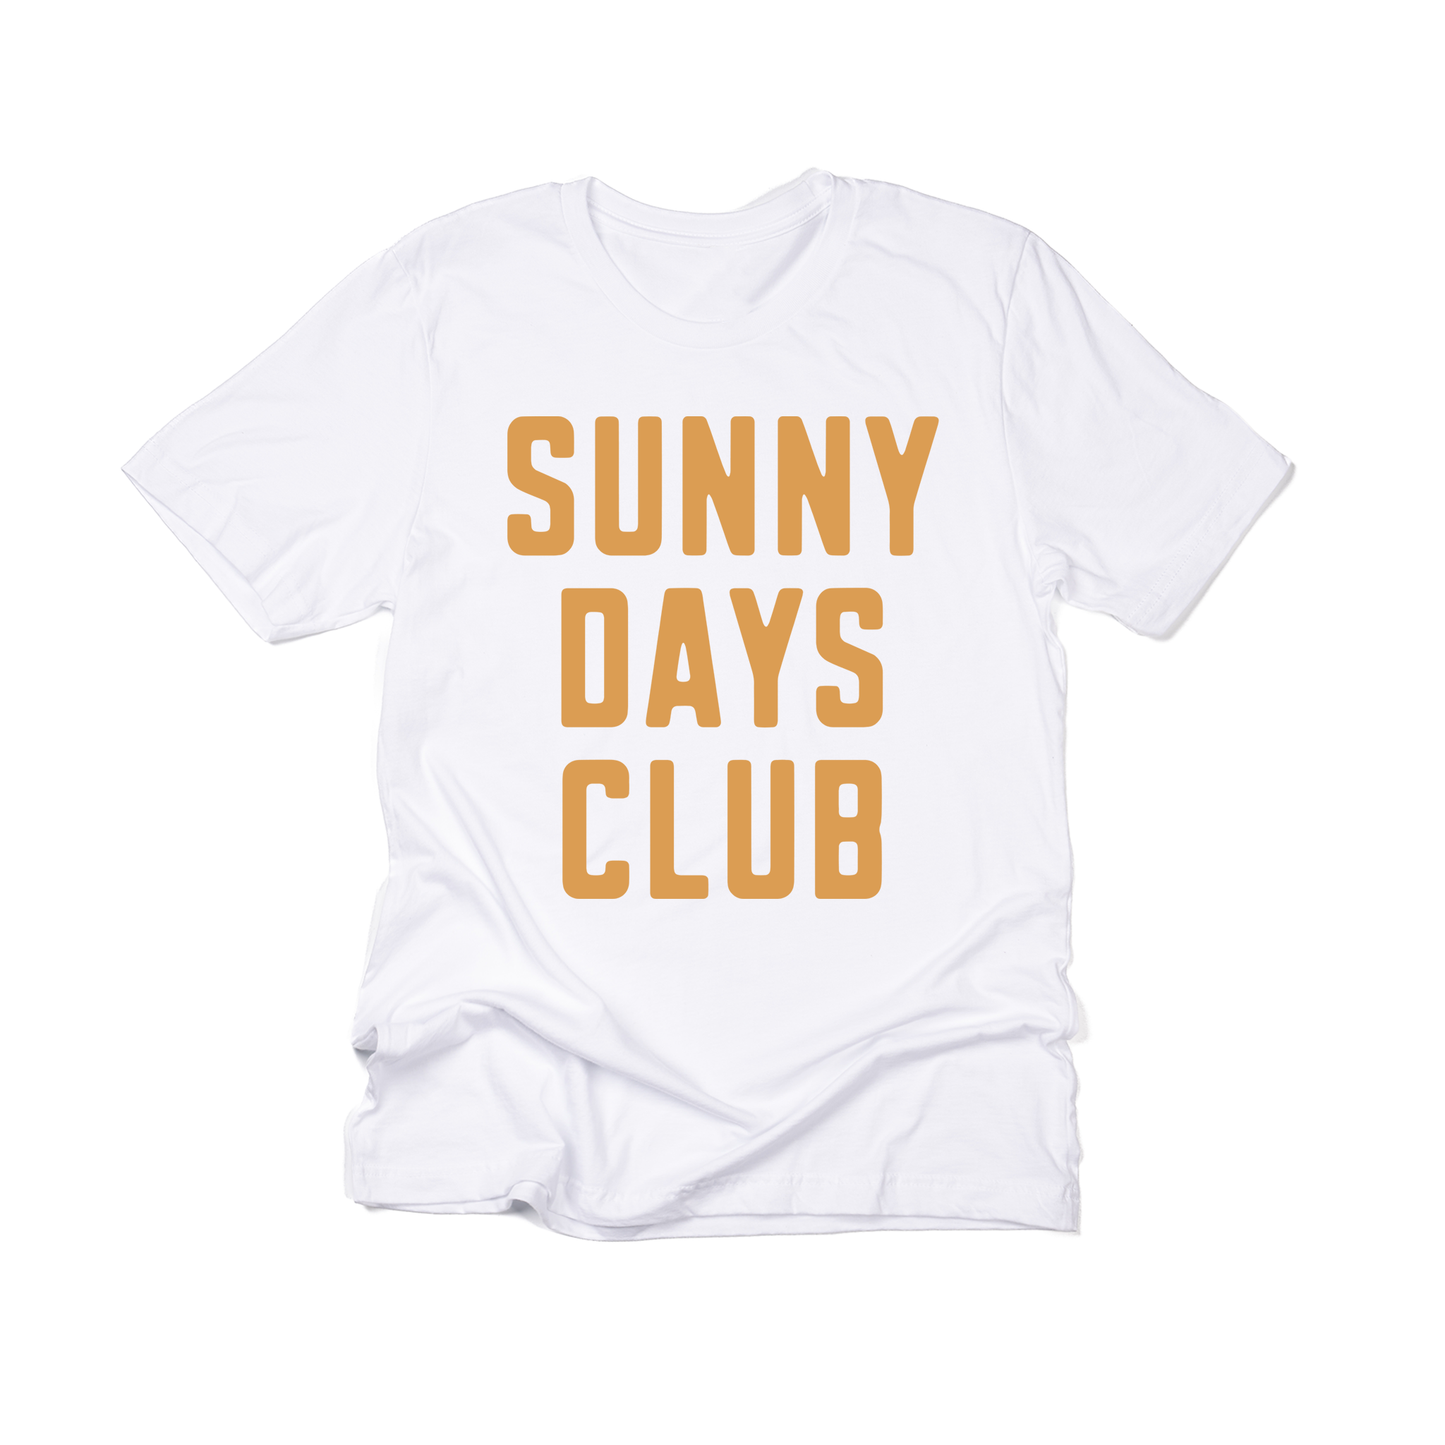 Sunny Days Club (Mustard) - Tee (Vintage White)